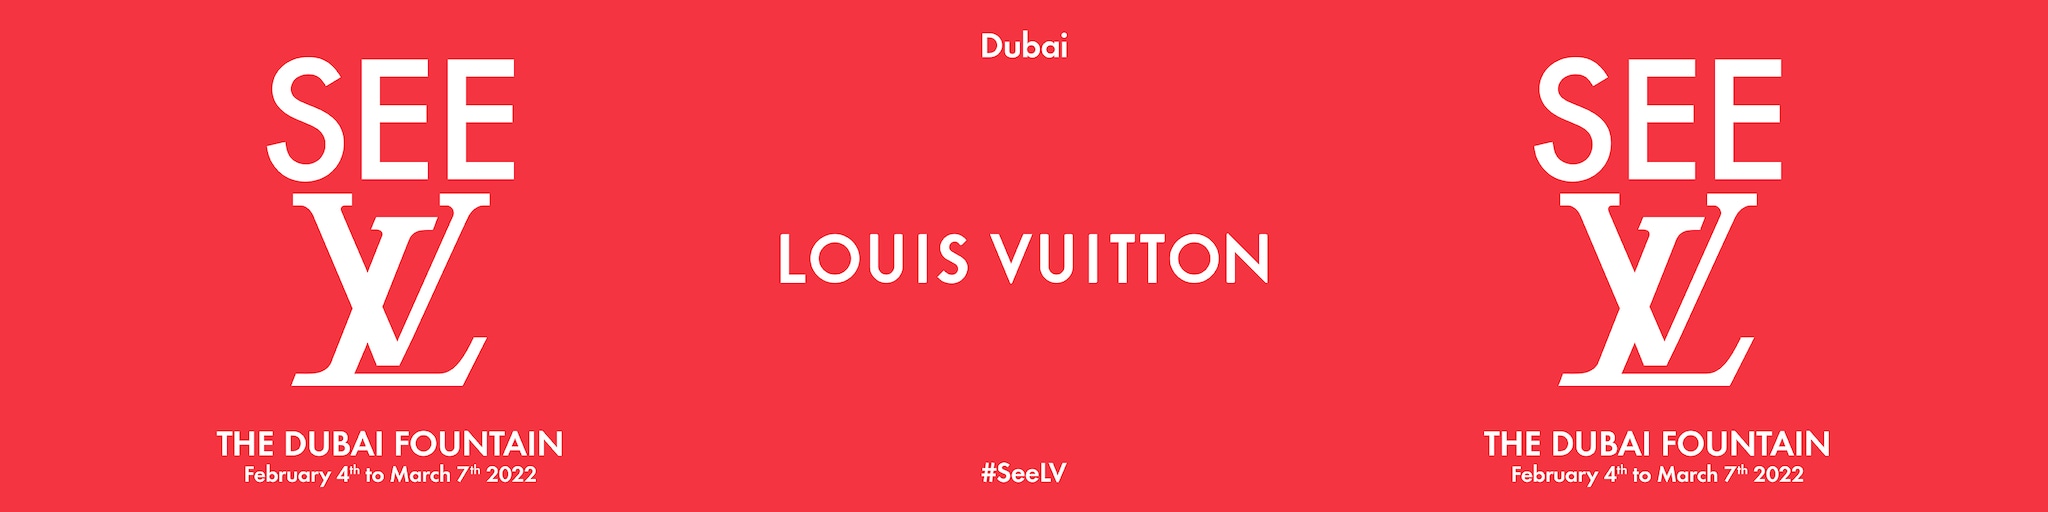 Dubai Media Office on X: .@LouisVuitton to presents SEE LV, an